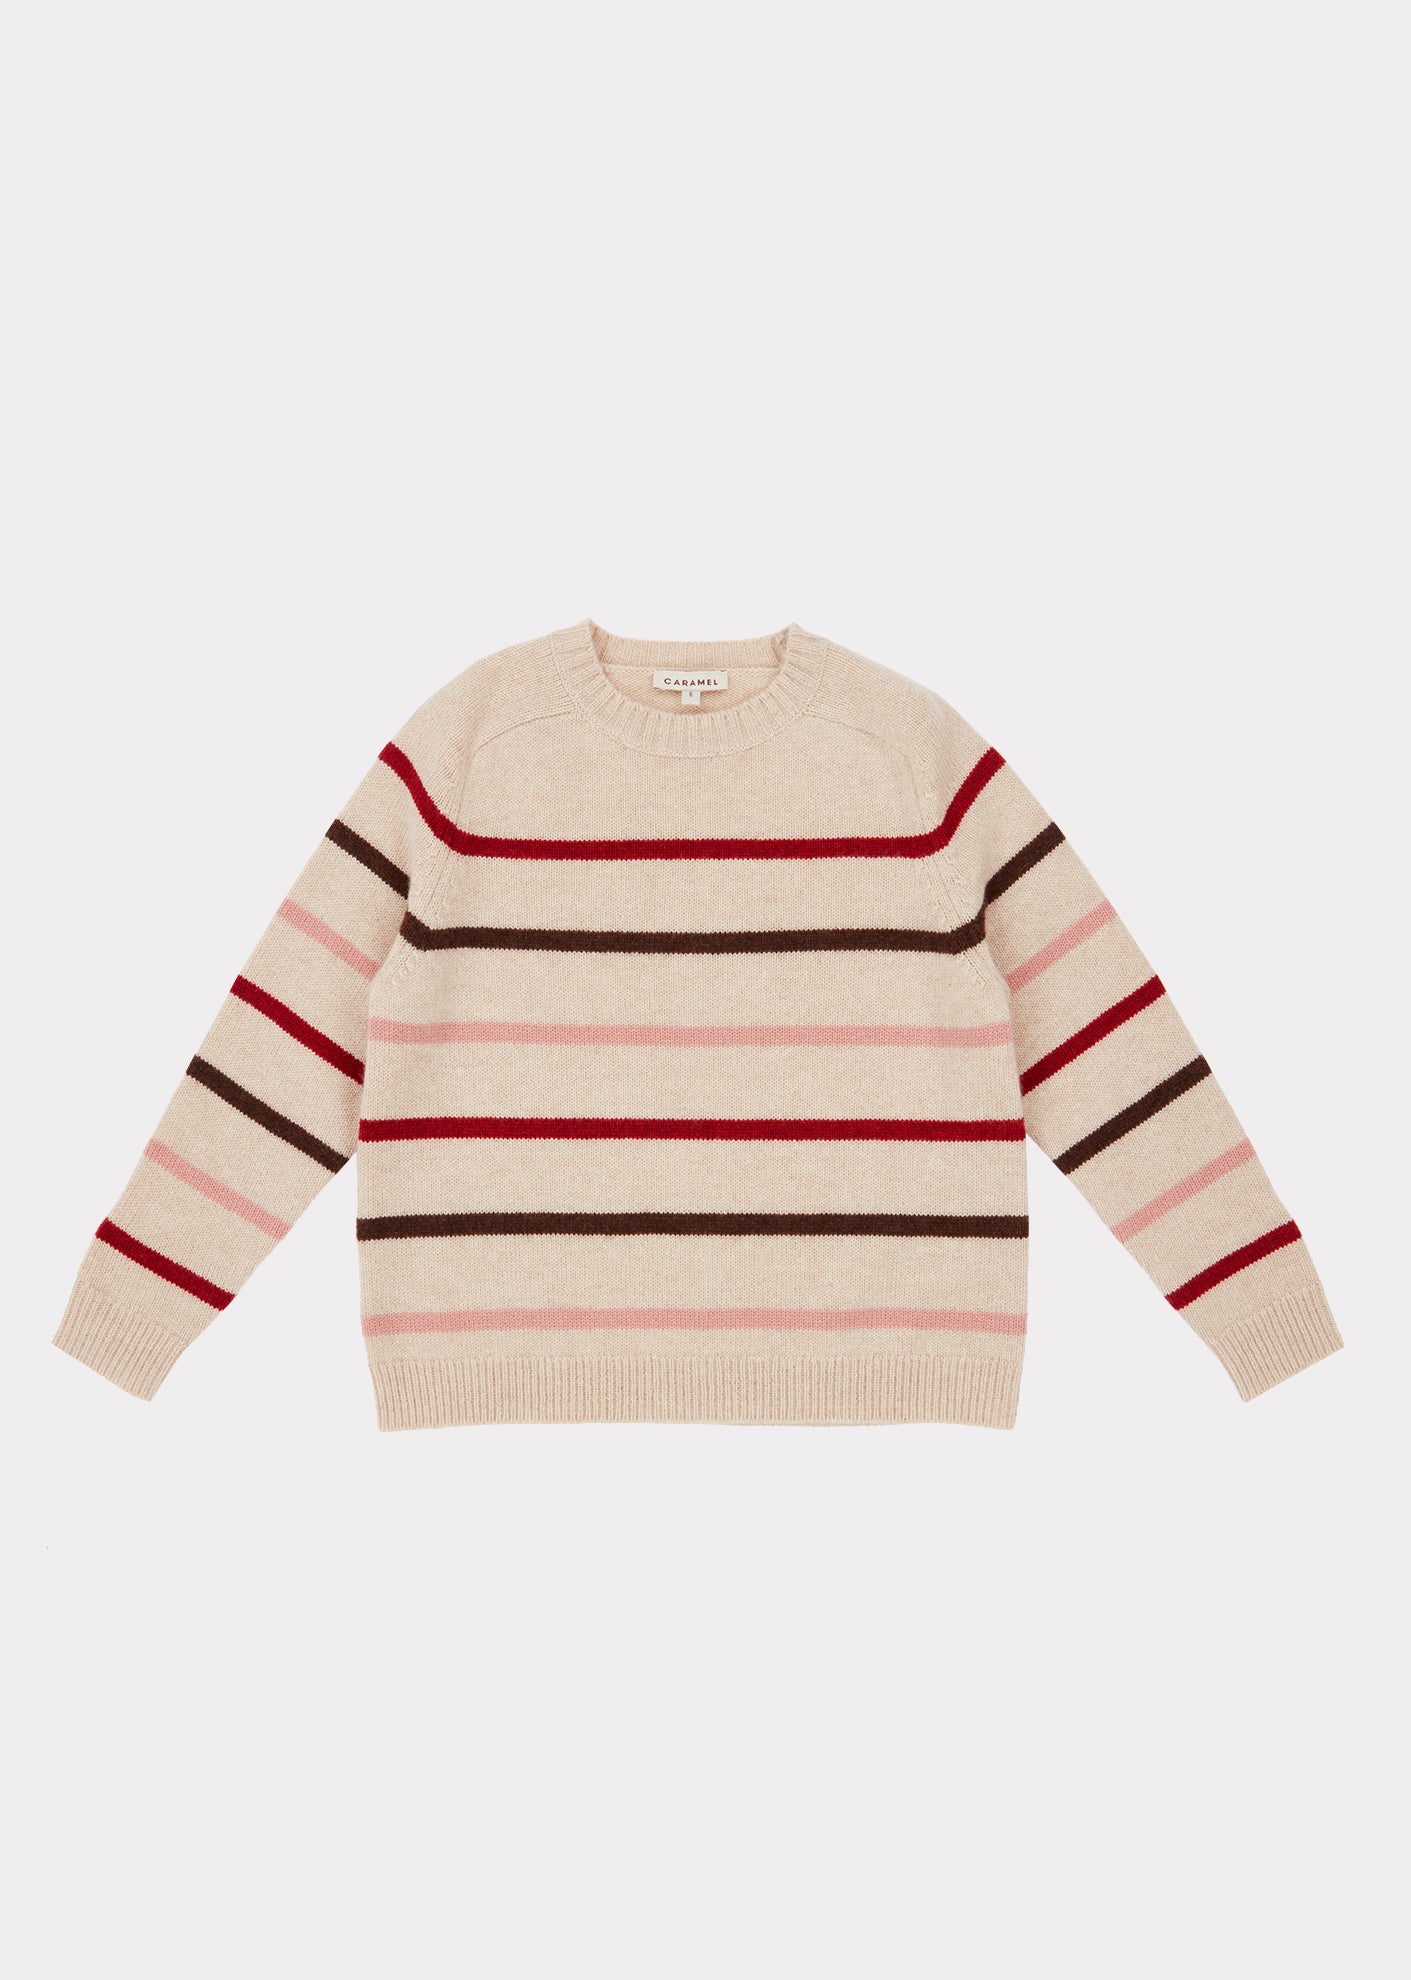 Boys & Girls Khaki Stripe Cashmere Sweater